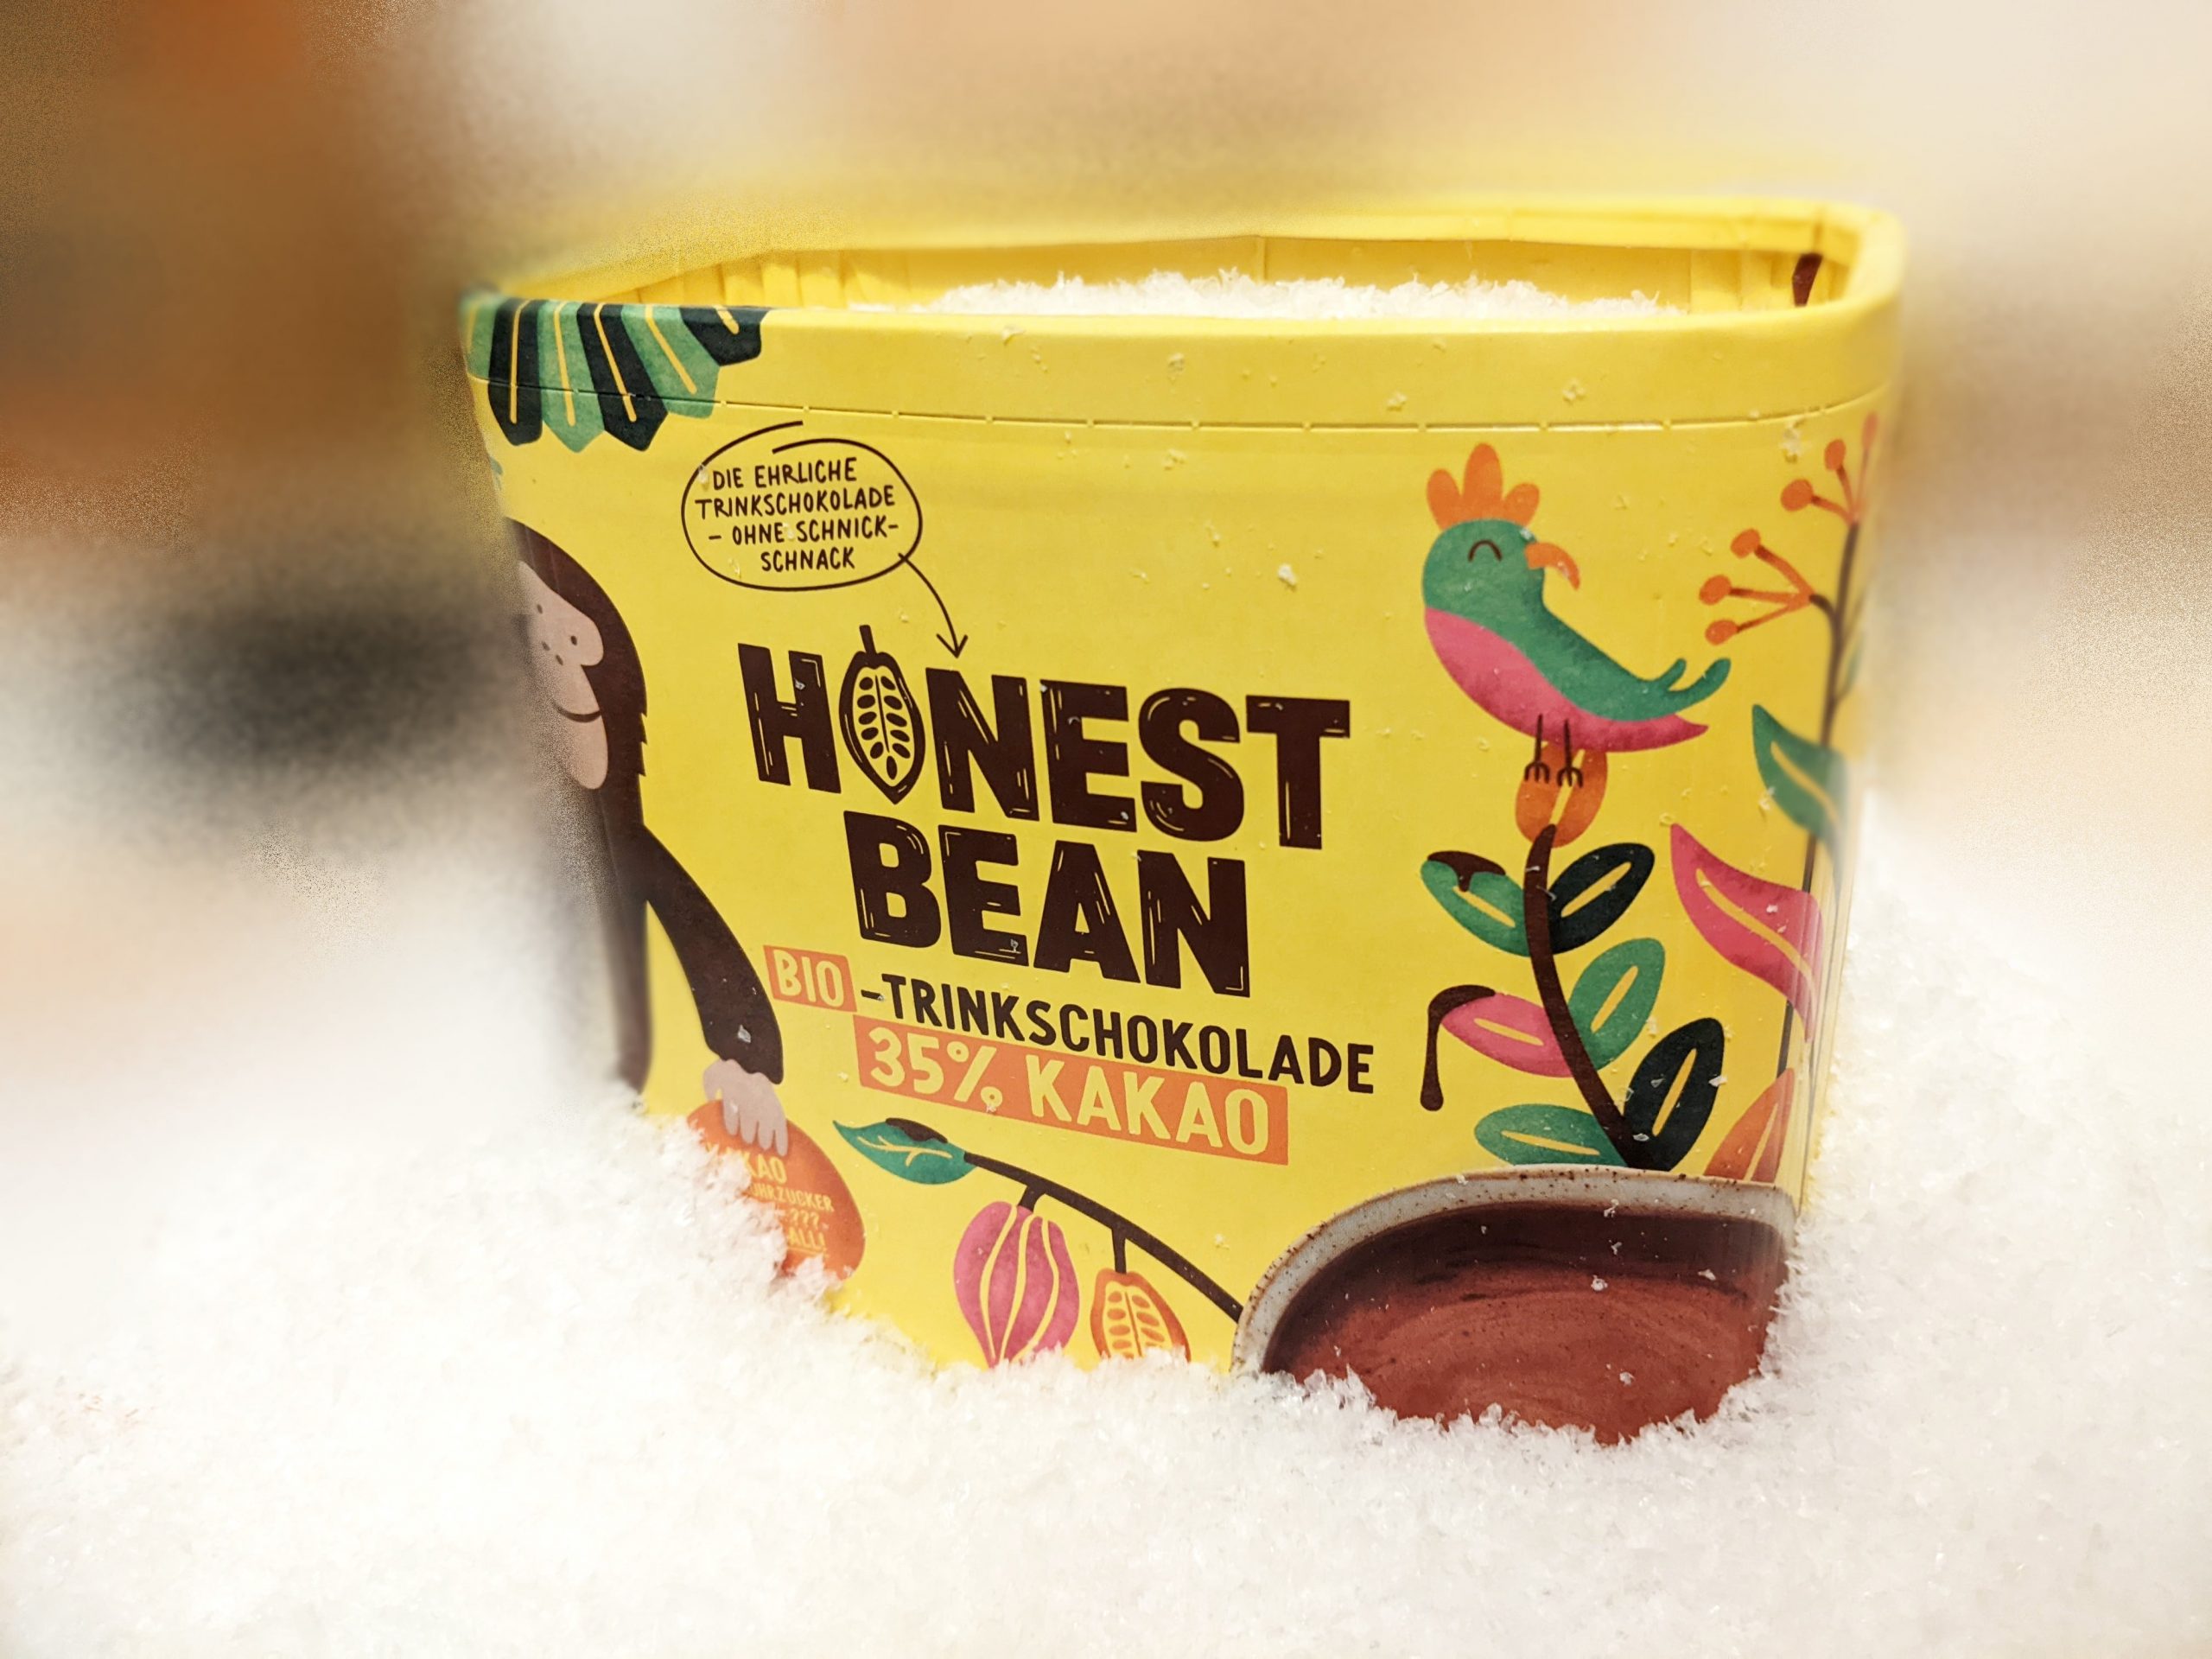 Honest Bean BIO Trinkschokoladenpulver, 35% Kakao